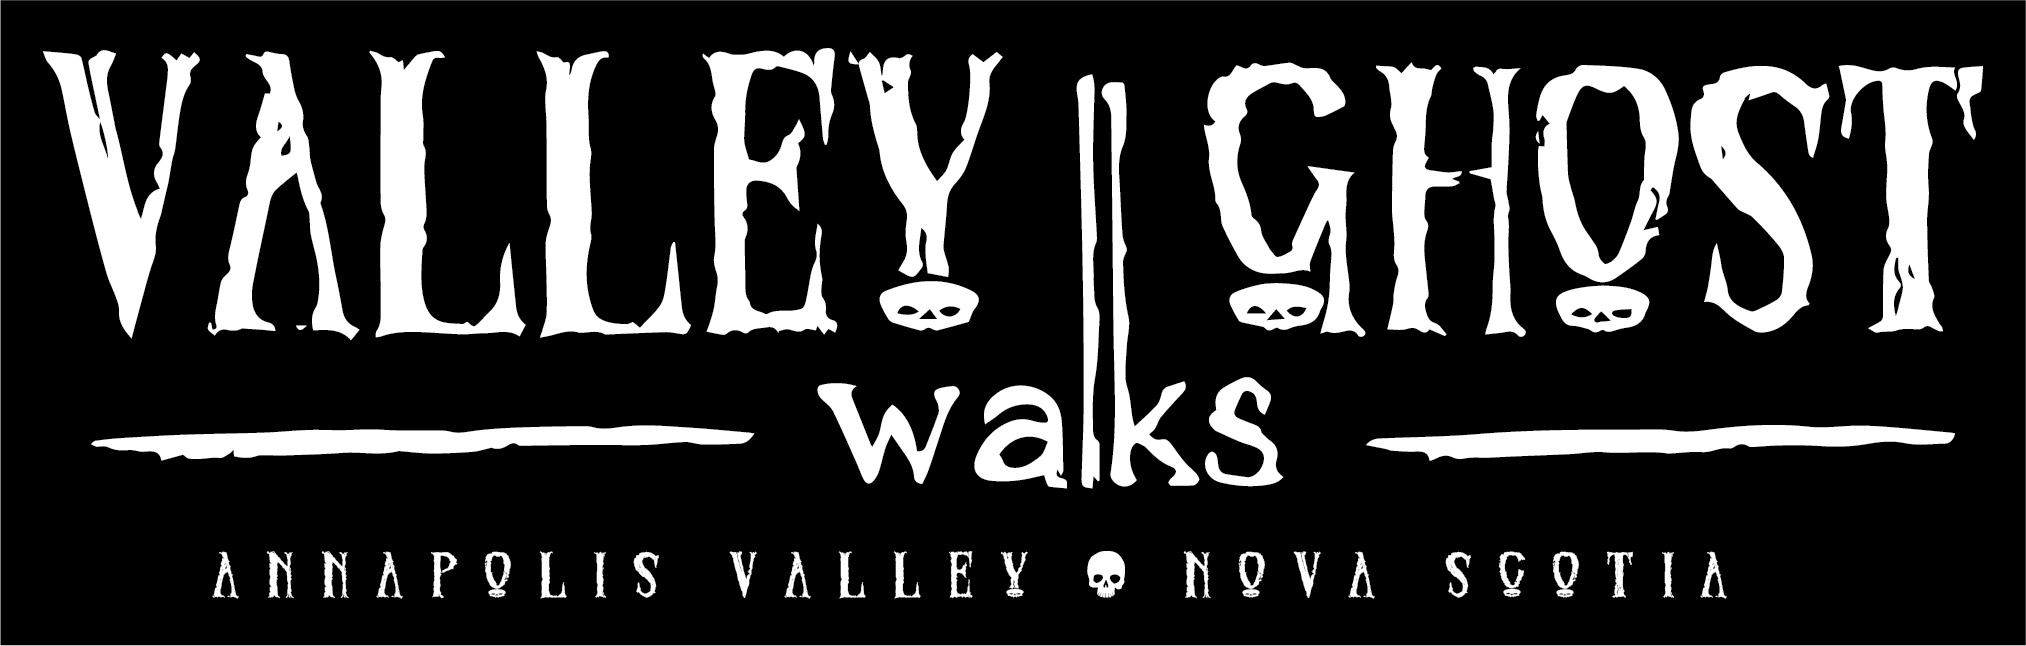 Valley Ghost Walks                    